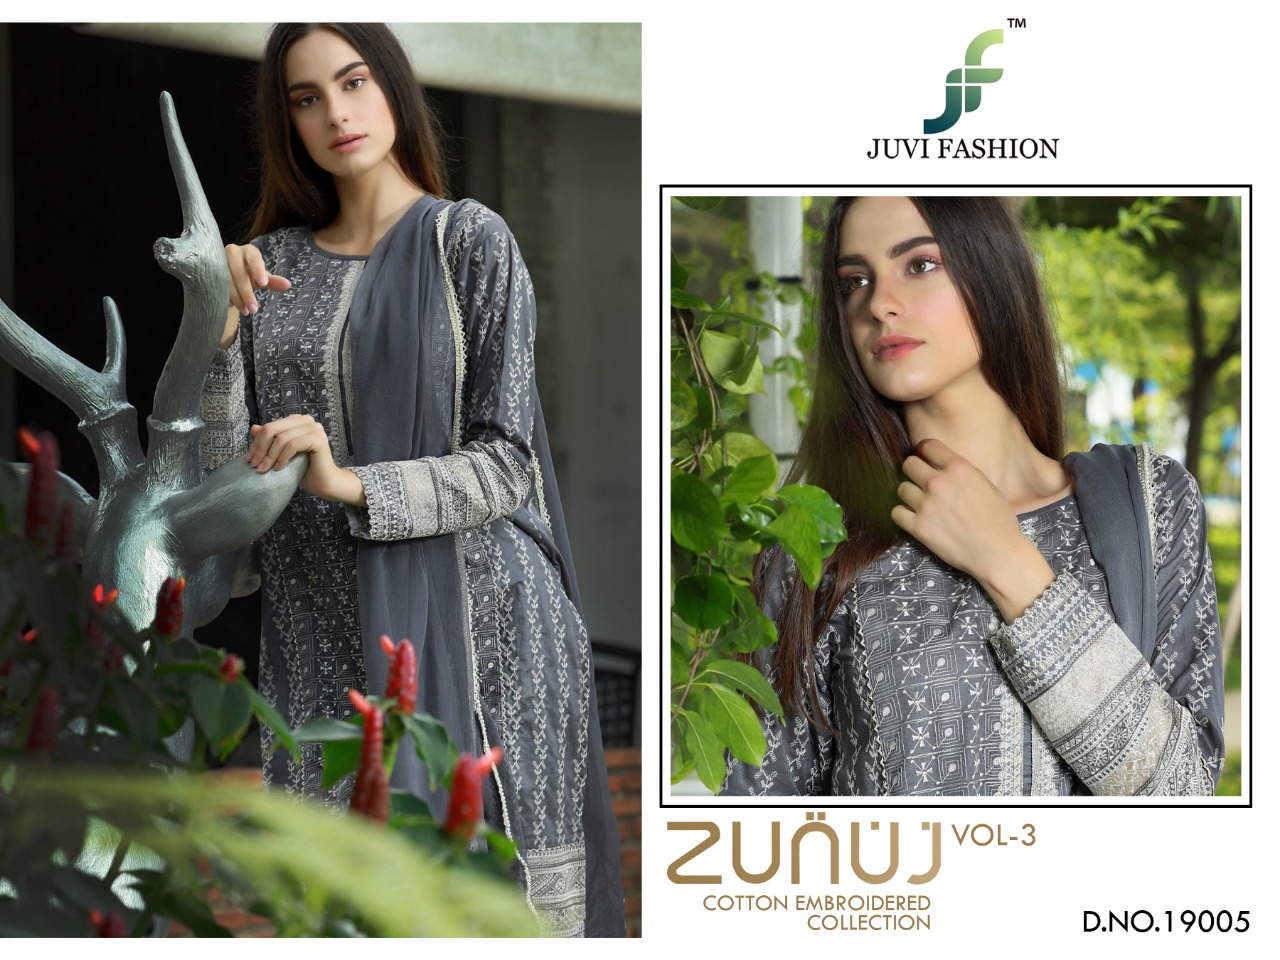 JUVI fashion presents zunuj vol 3 Simple elegant look casual salwar kameez Collection